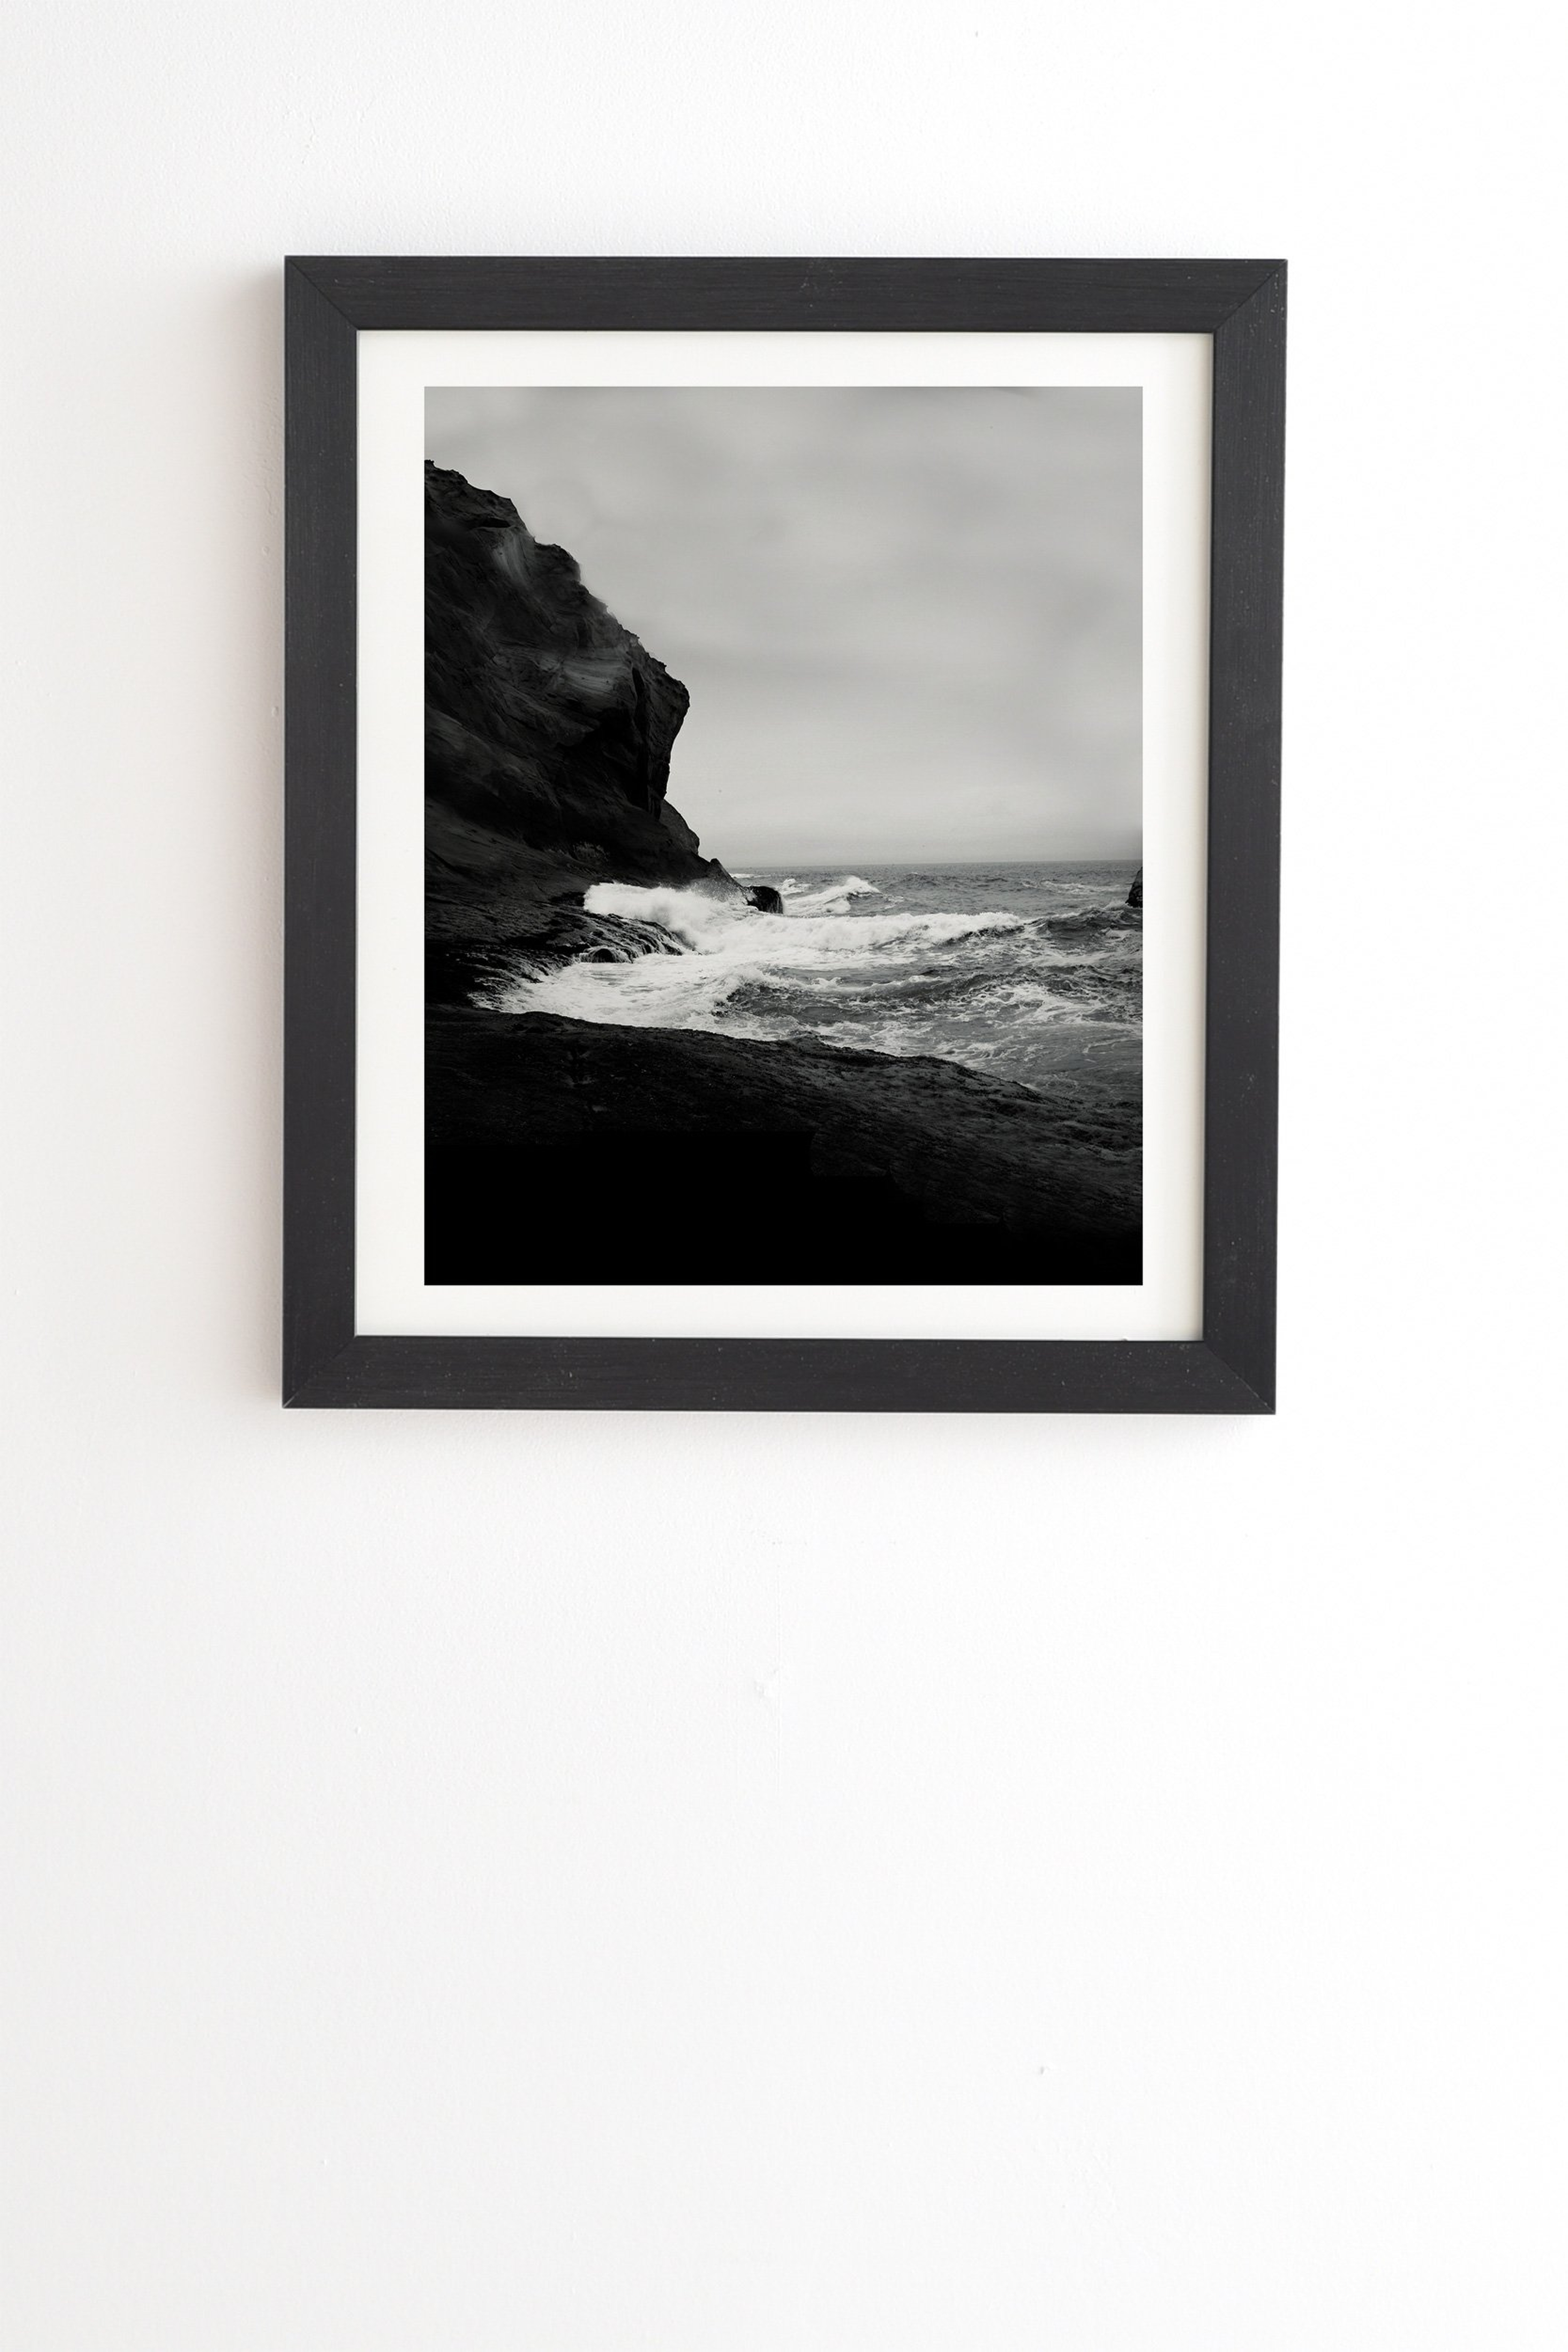 OCEAN 1 - 8''x 9.5''- Basic black frame with mat - Wander Print Co.